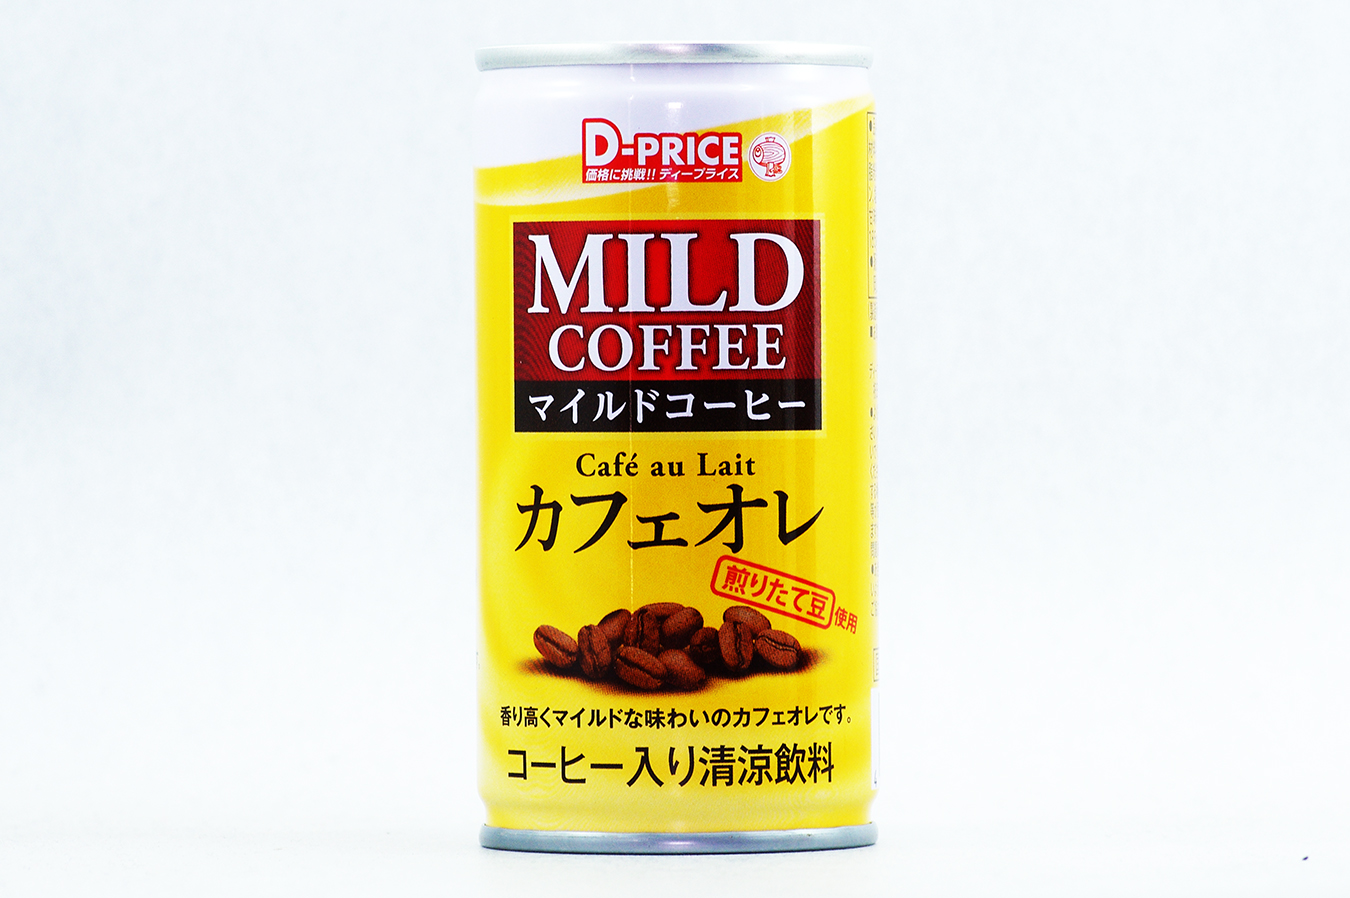 D-PRICE マイルドコーヒー カフェオレ